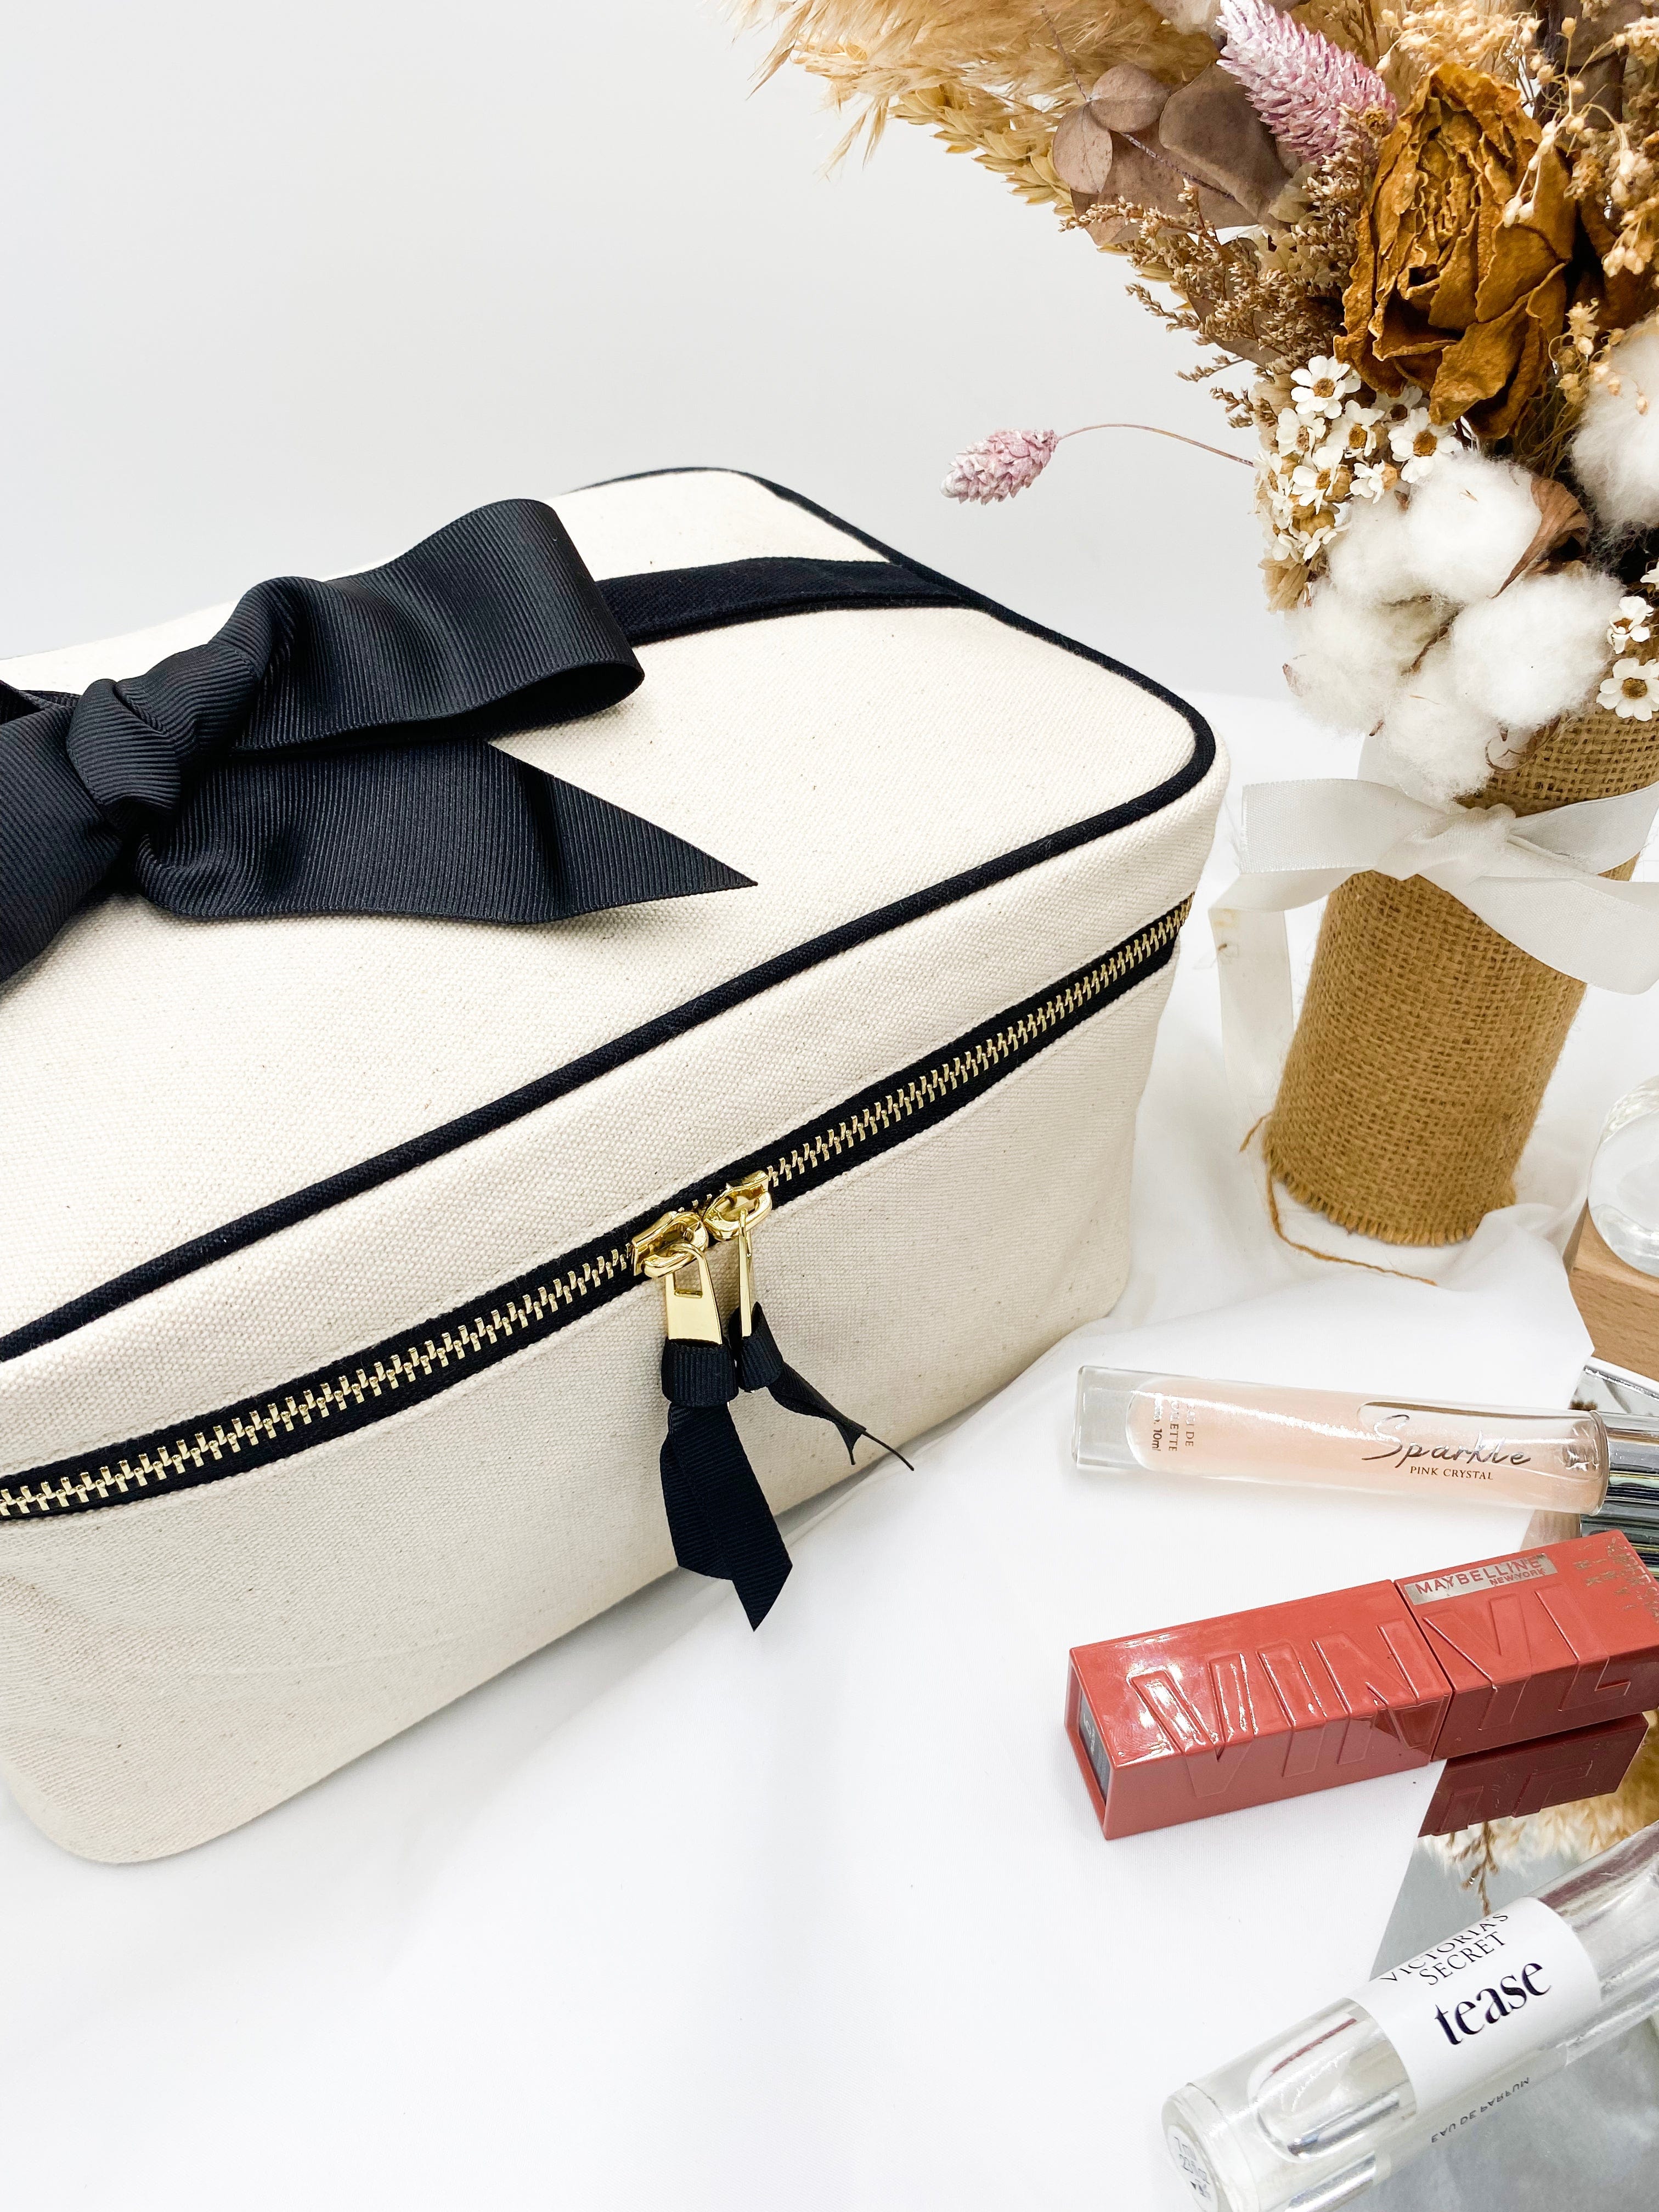 Popular Case for Travel/Home/Makeup organizing - Customizable, Laminated Lining, Medium size, Cream - Bag-all